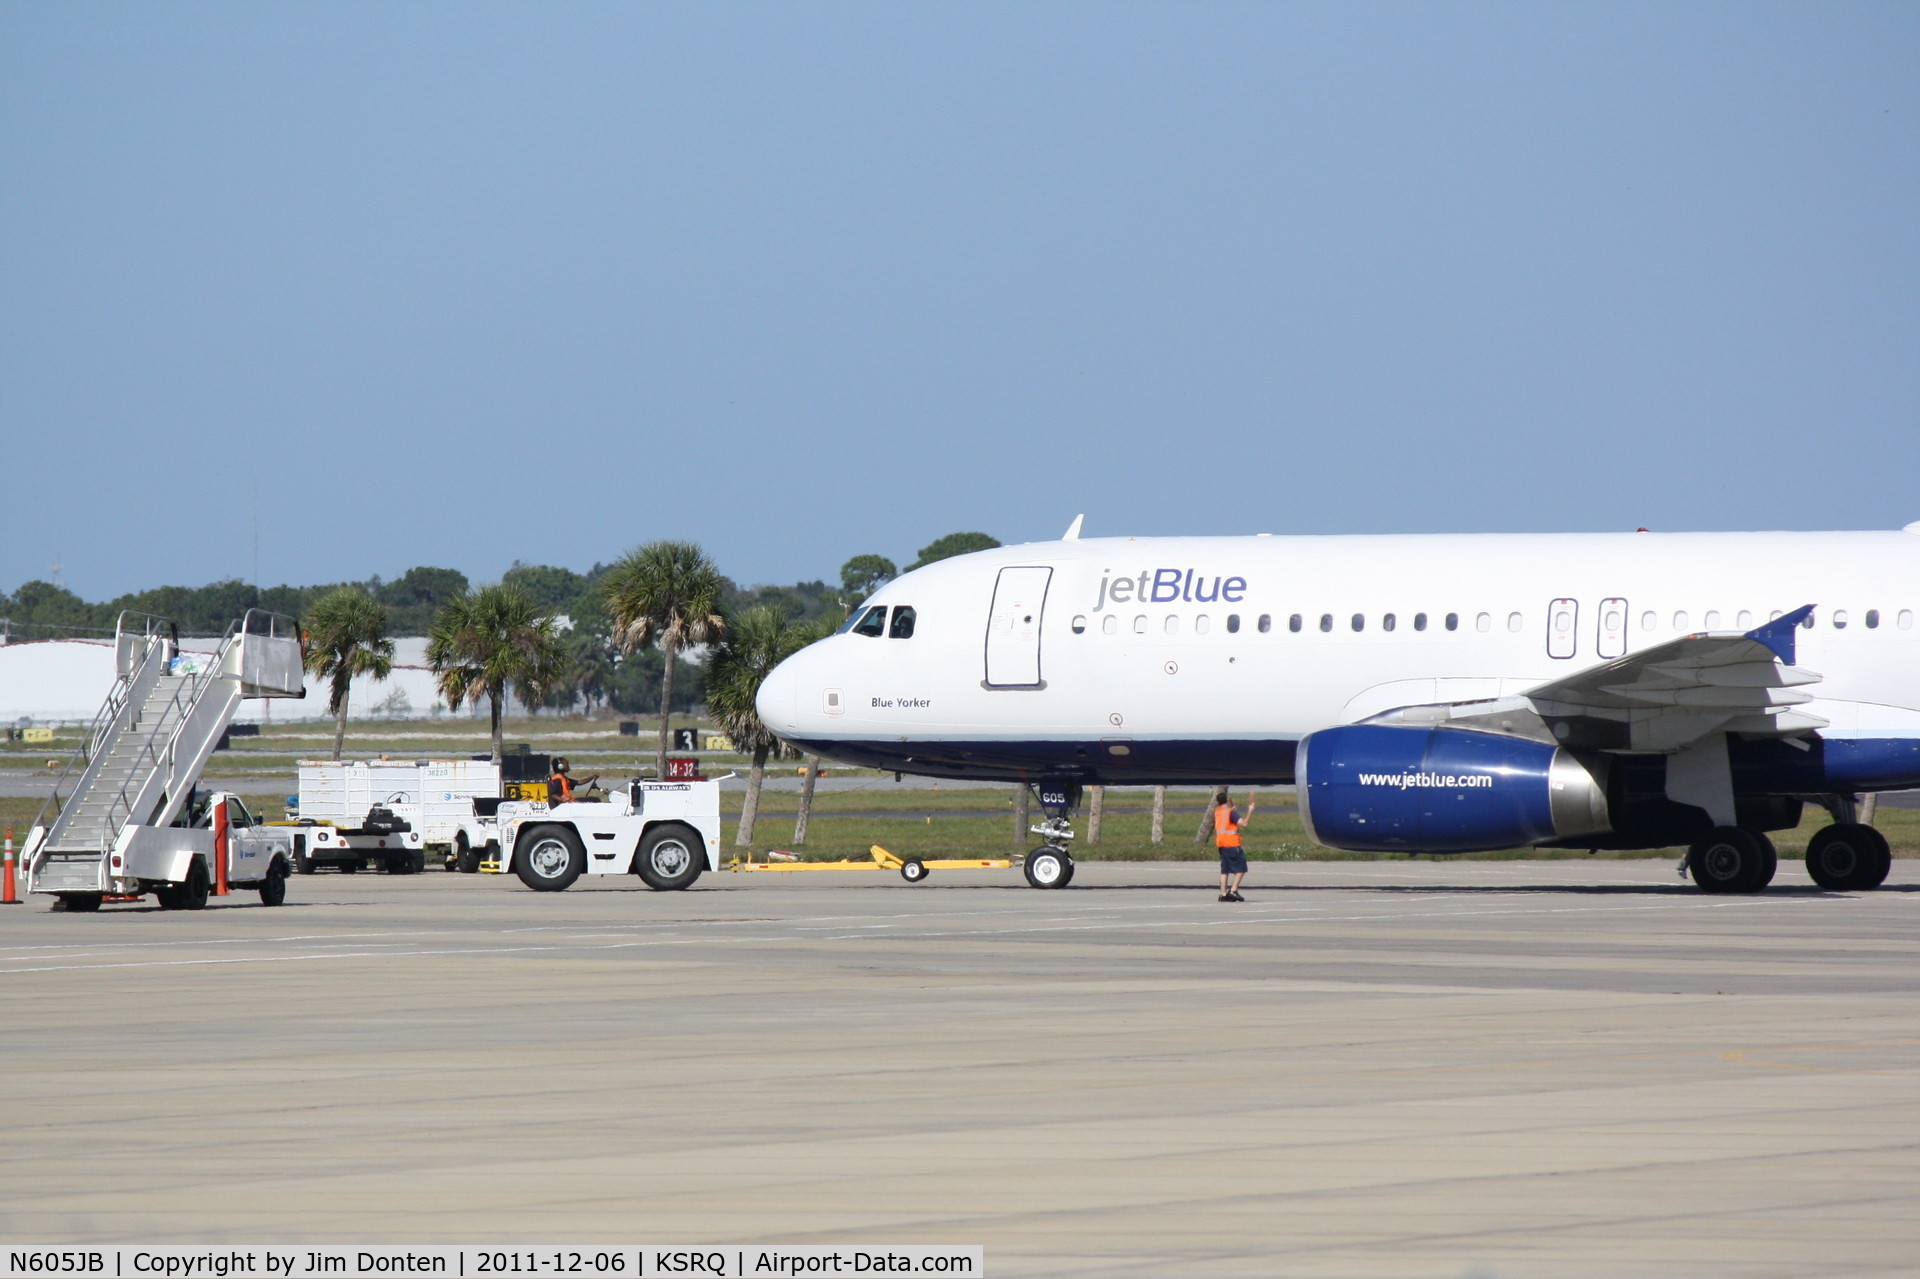 N605JB, 2005 Airbus A320-232 C/N 2368, Jet Blue Airbus A320 (N605JB) pushes back from the gate at Sarasota-Bradenton International Airport